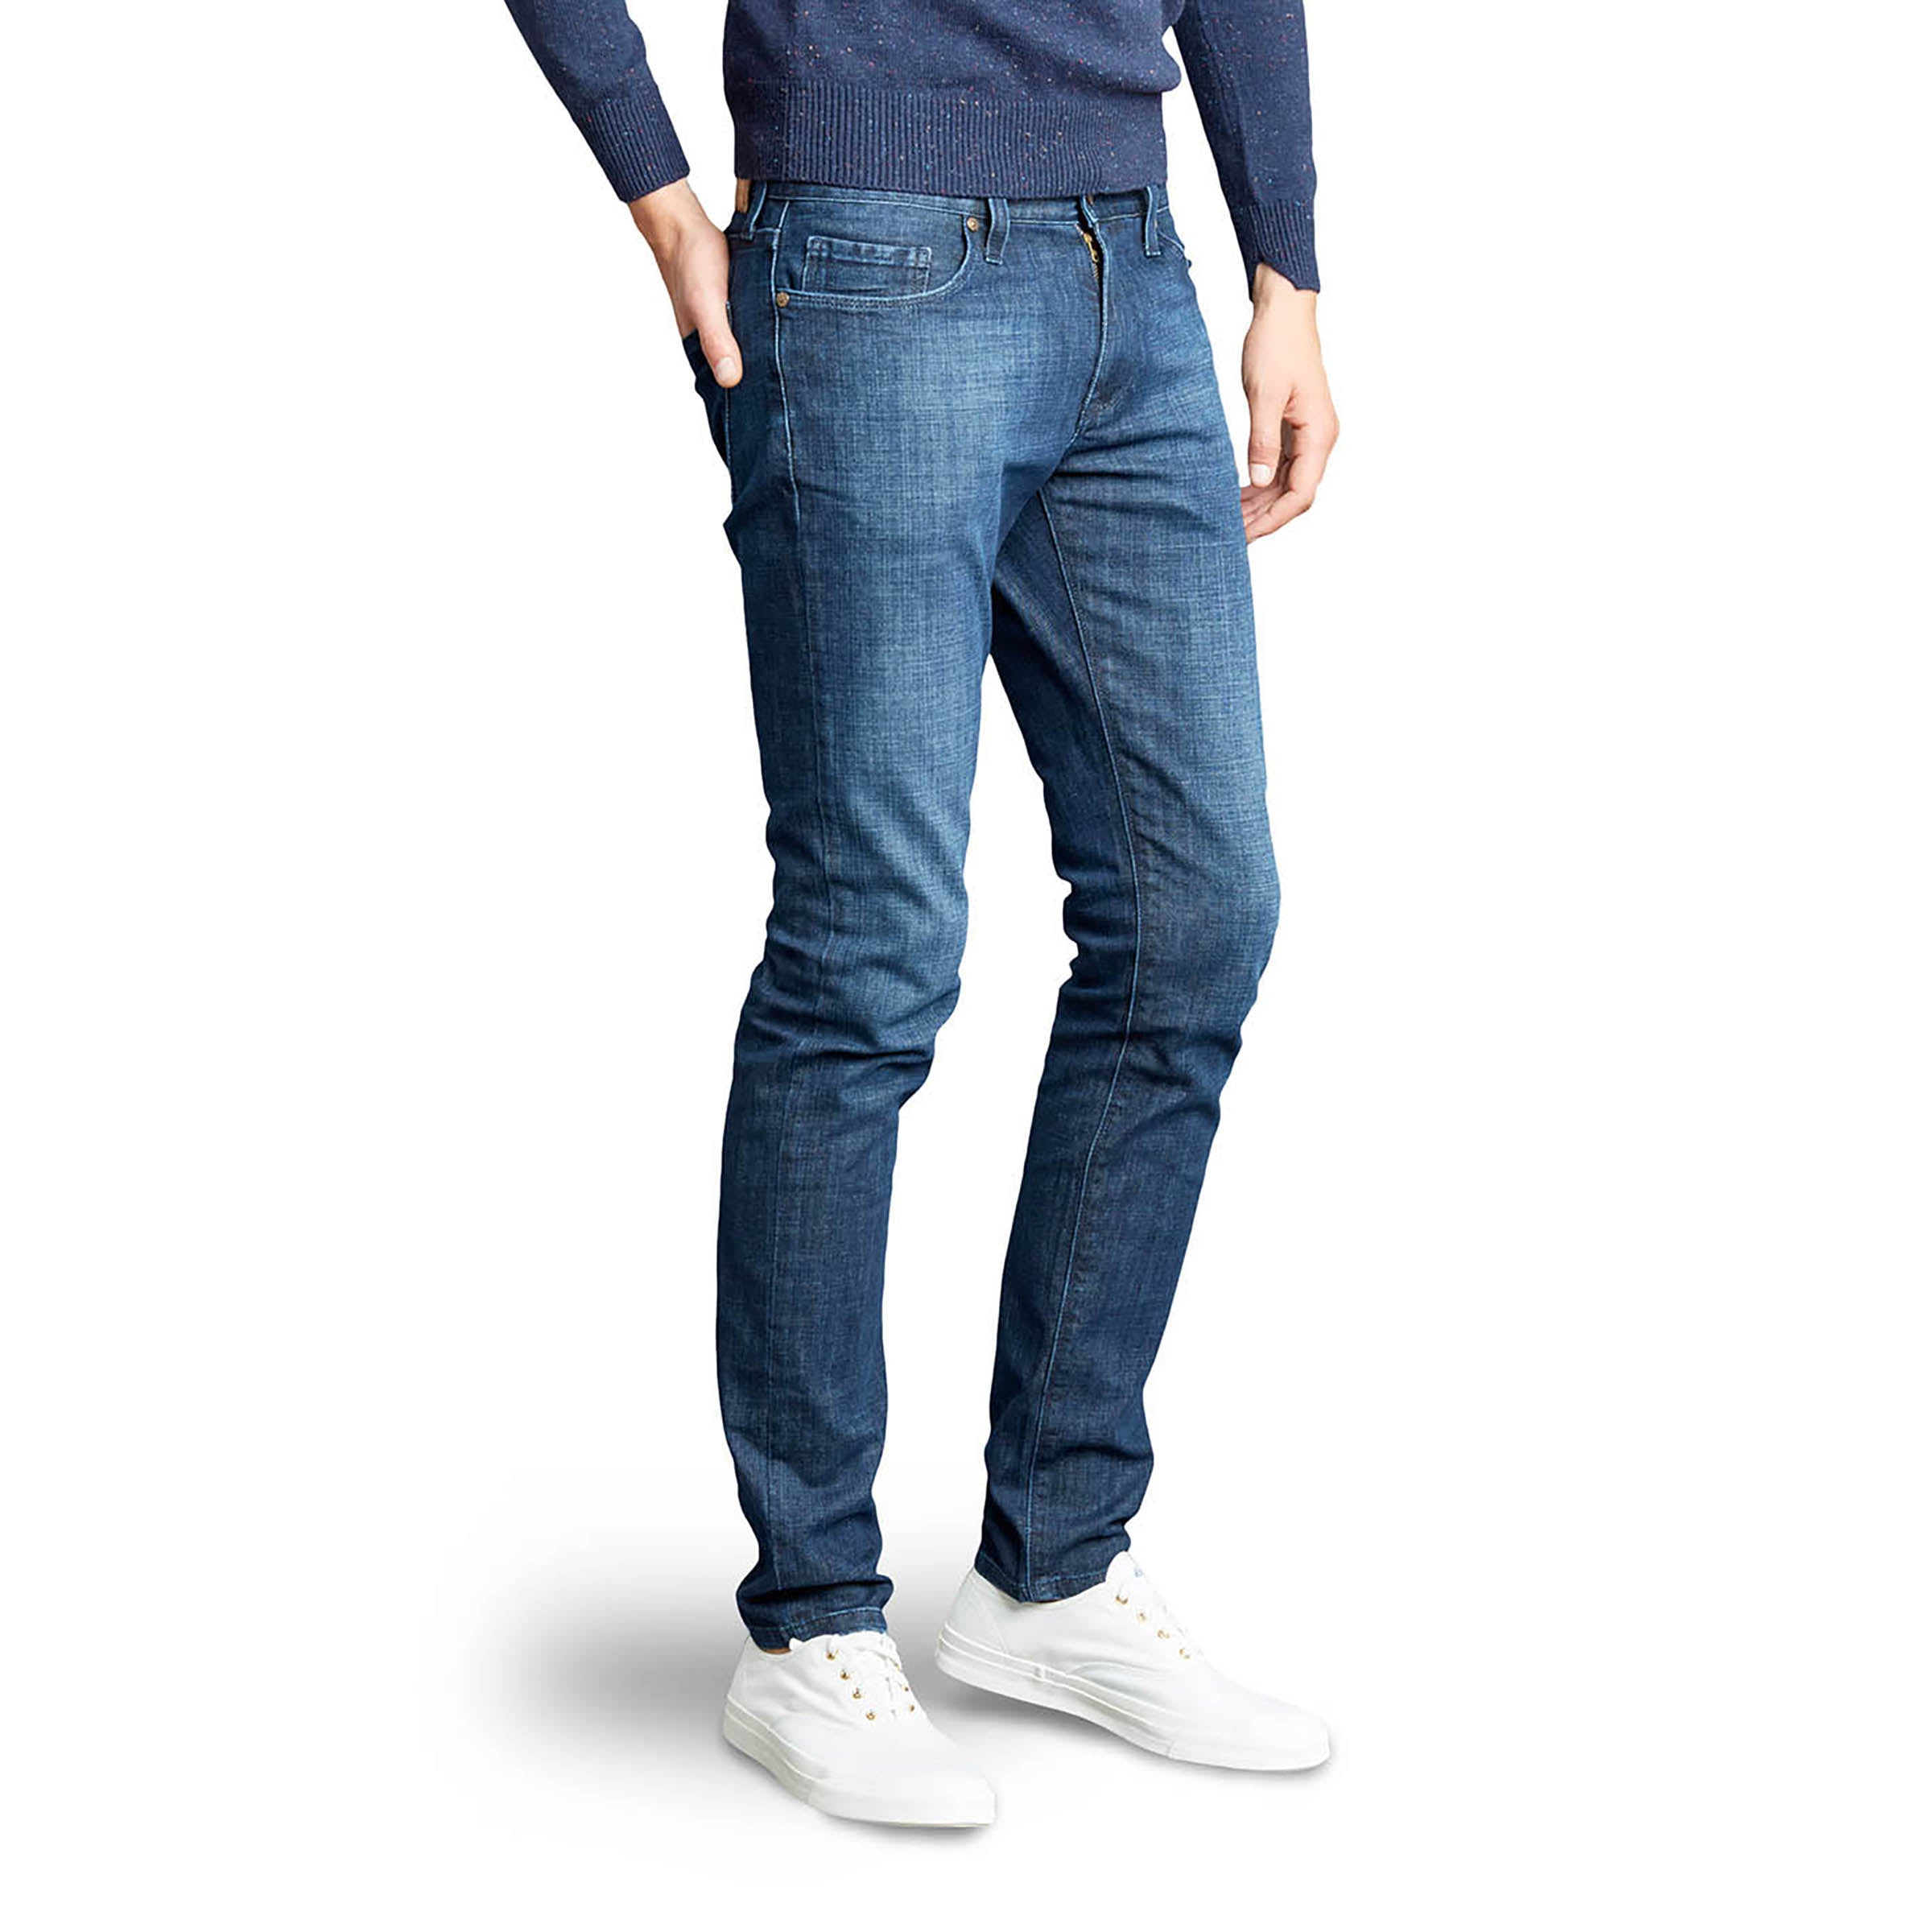 Men wearing Azul medio Skinny Mosco Jeans